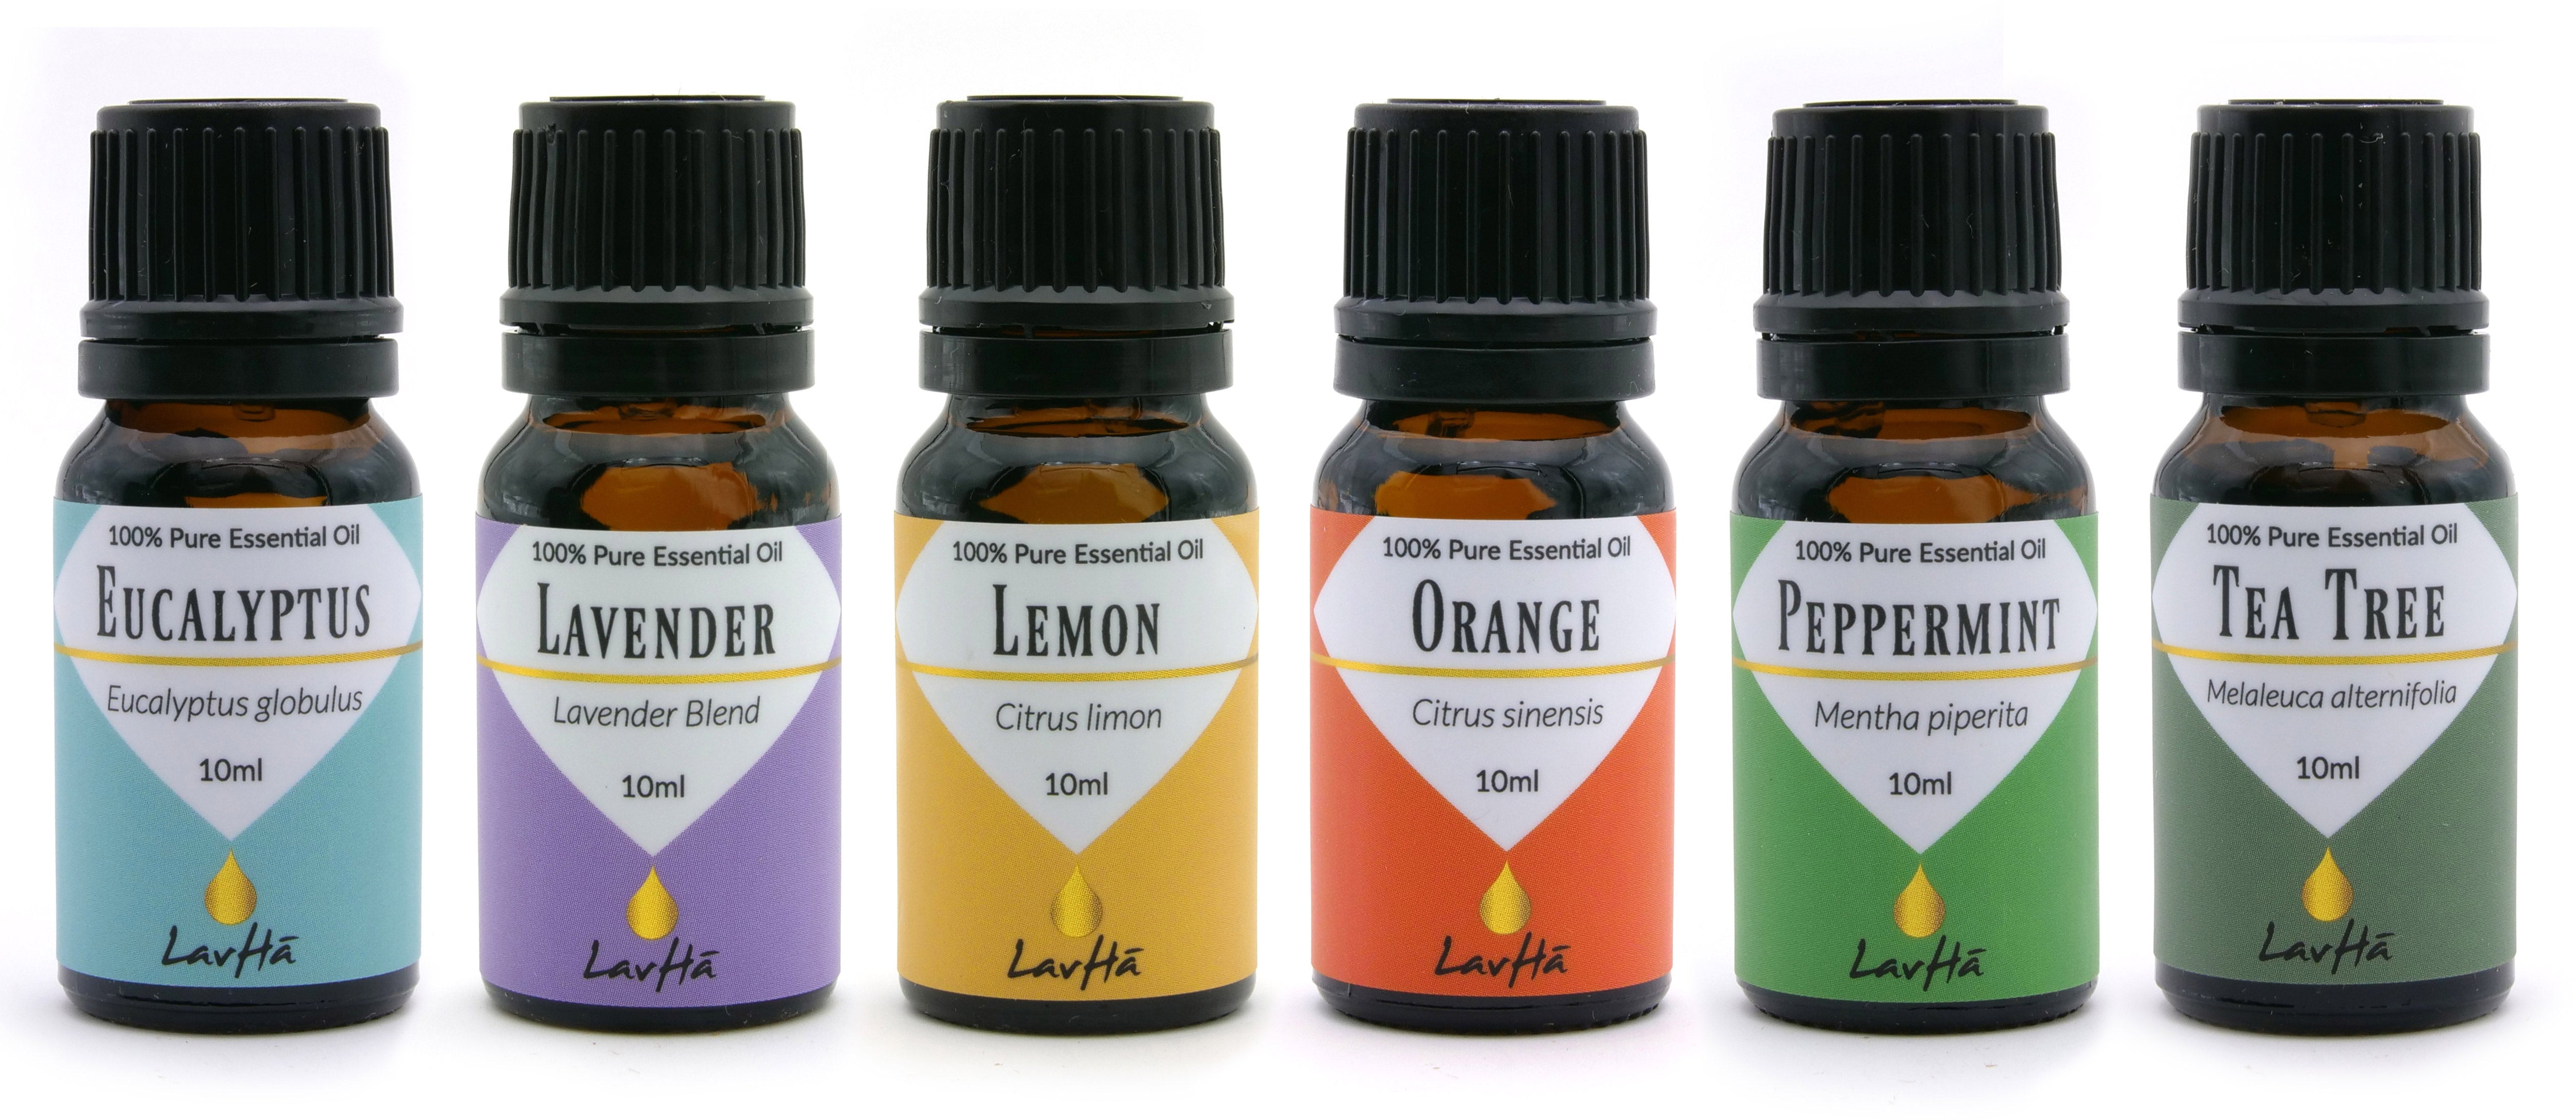 Eucalyptus Lavender Aromatherapy Essential Oil Diffuser Blend